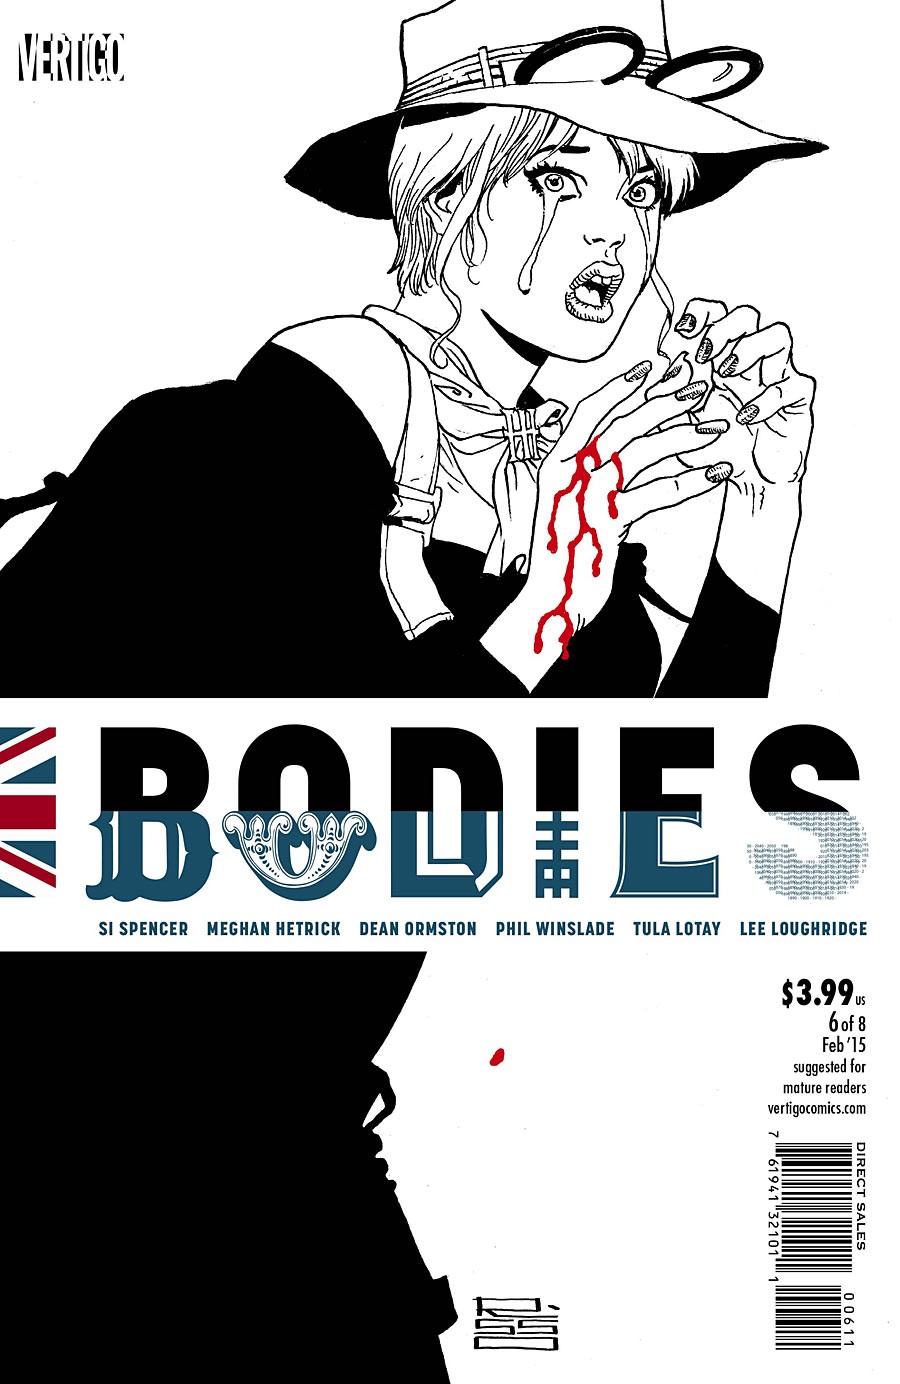 Bodies Vol. 1 #6